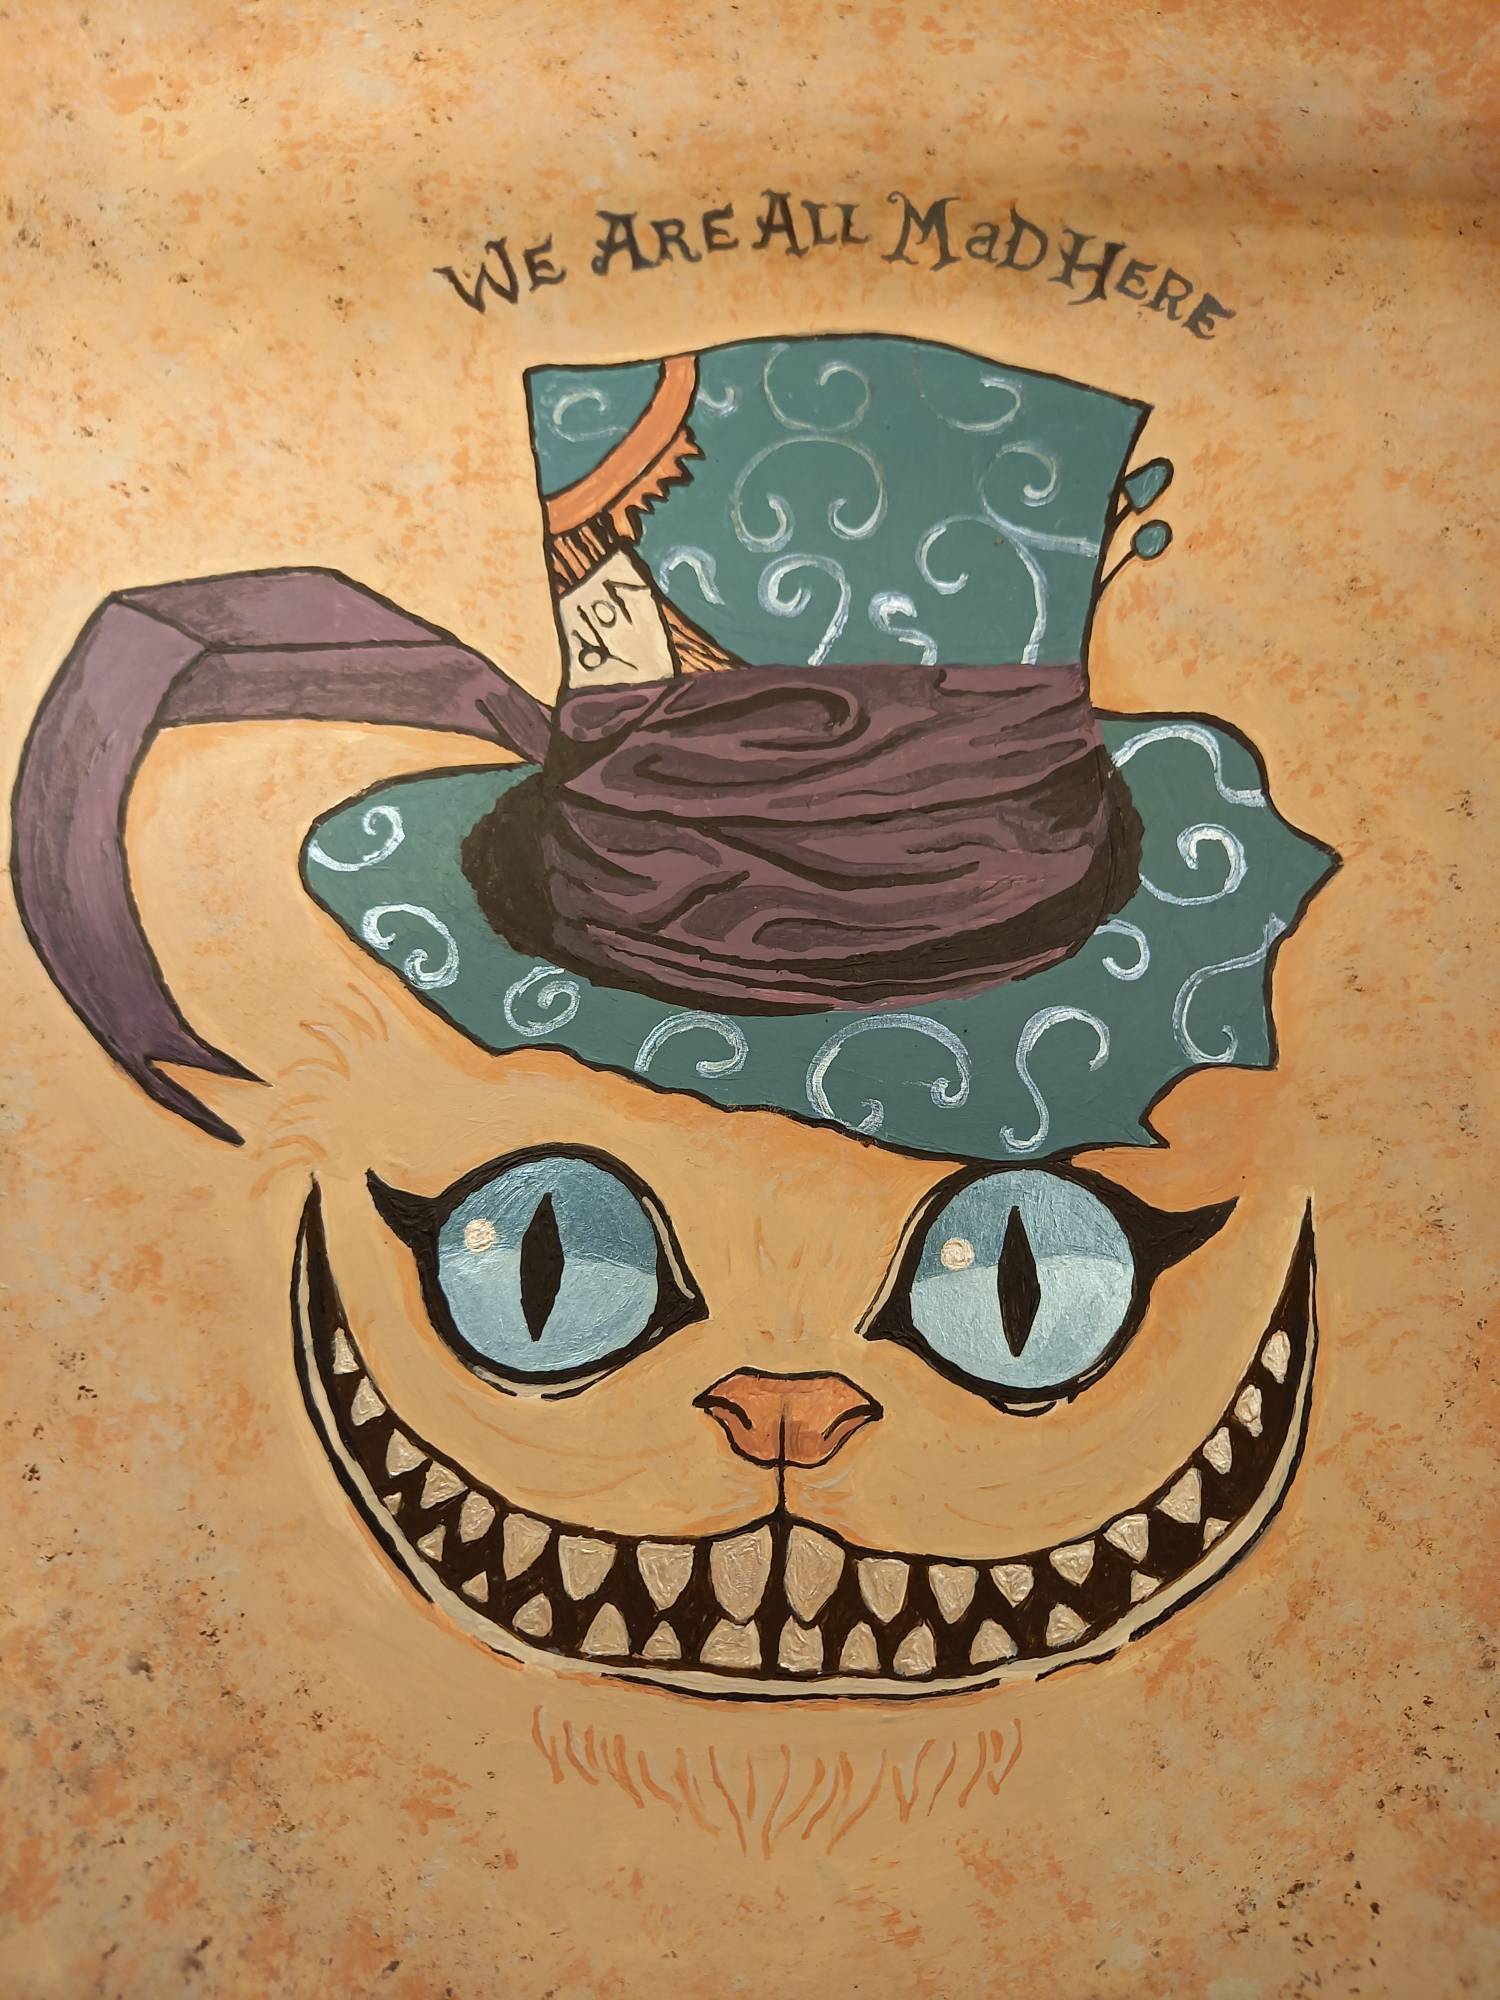 Grinsekatze- Cheshire cat by NatiCreative on DeviantArt